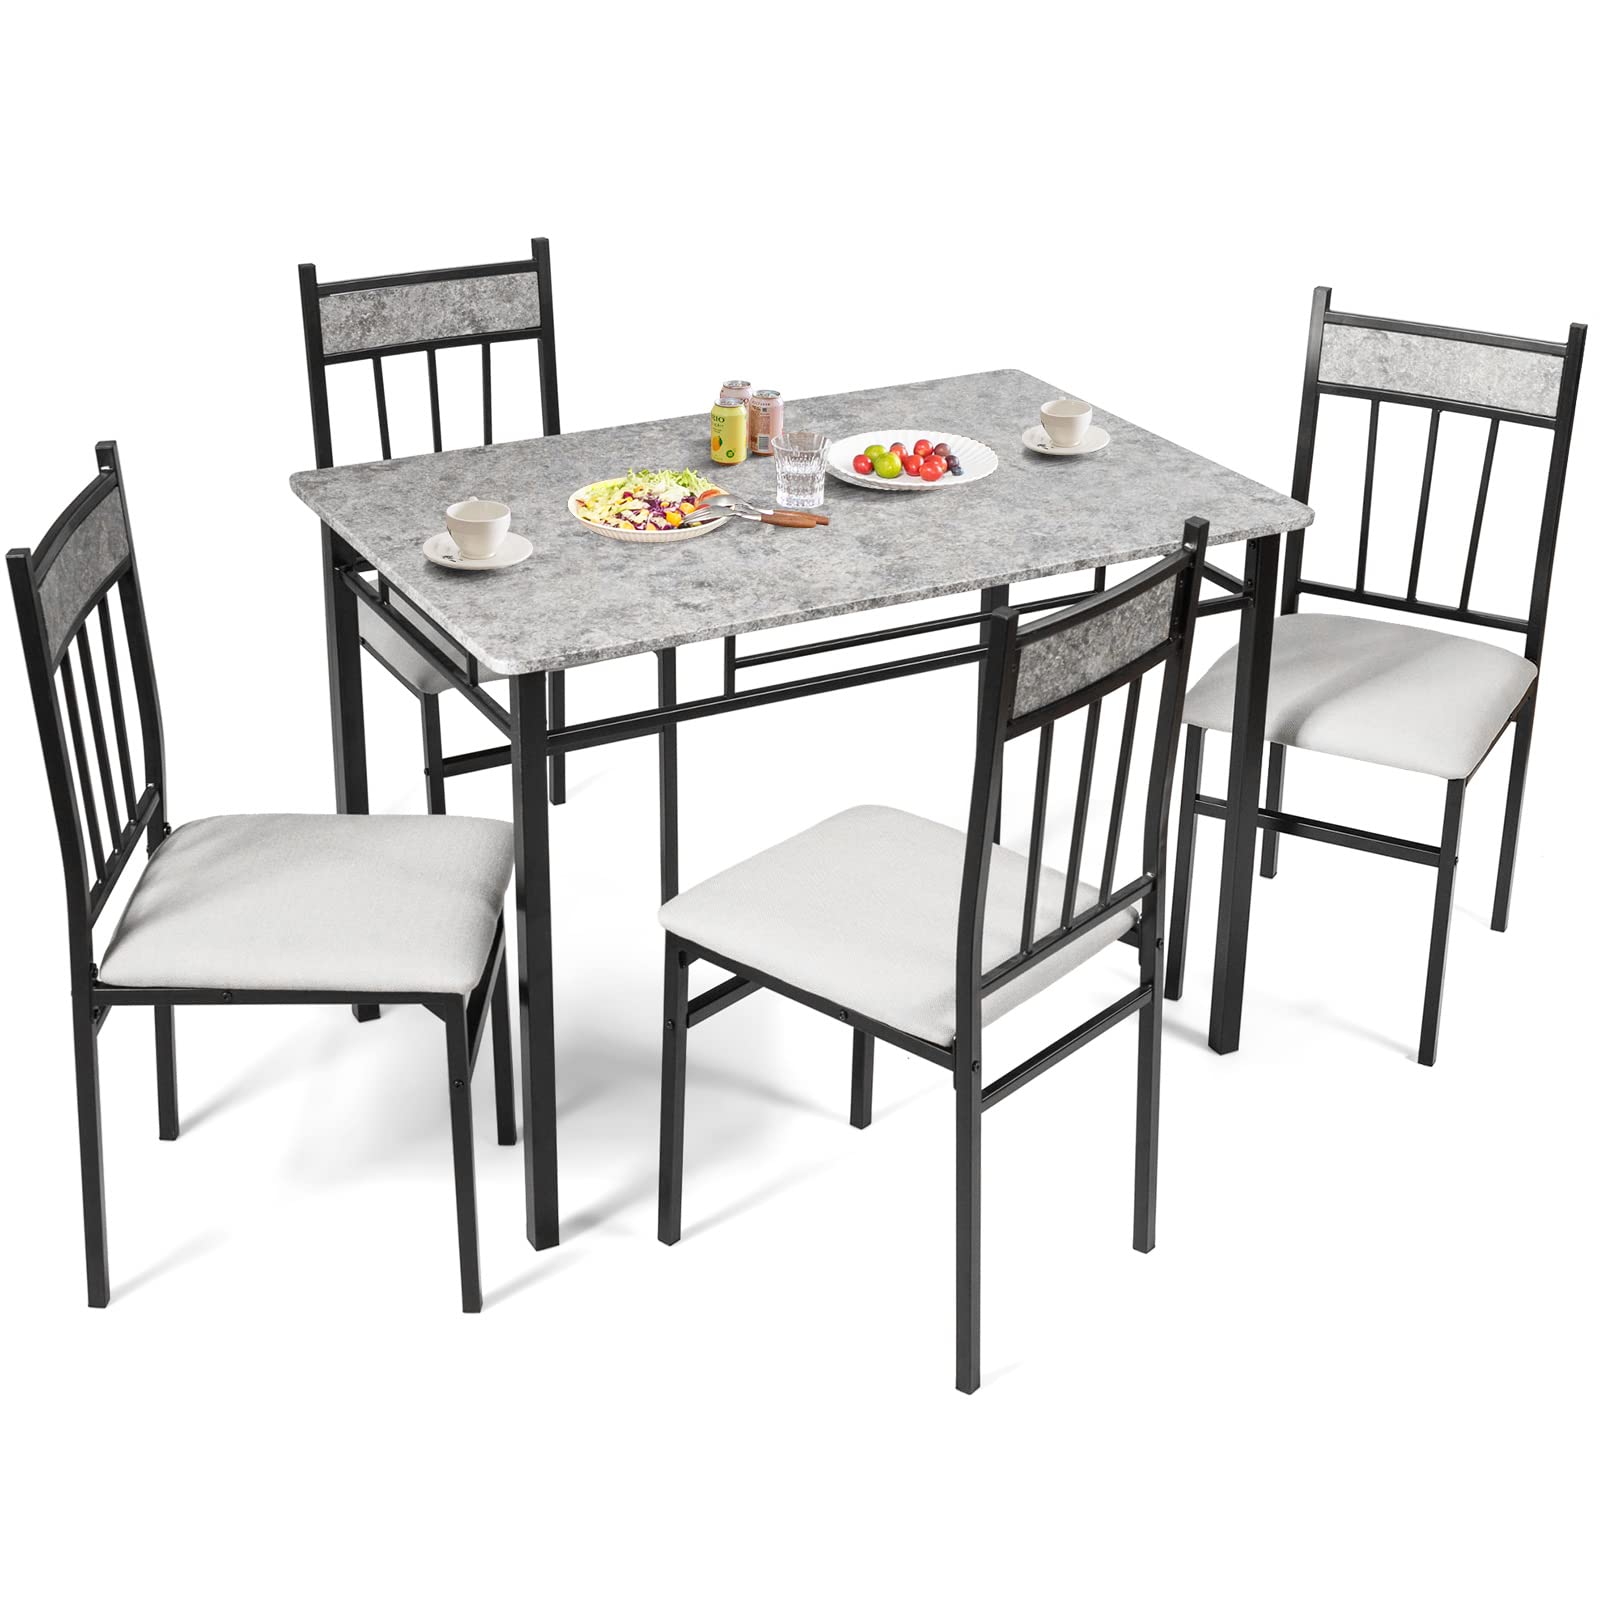 Giantex 5 Pieces Dining Table Set